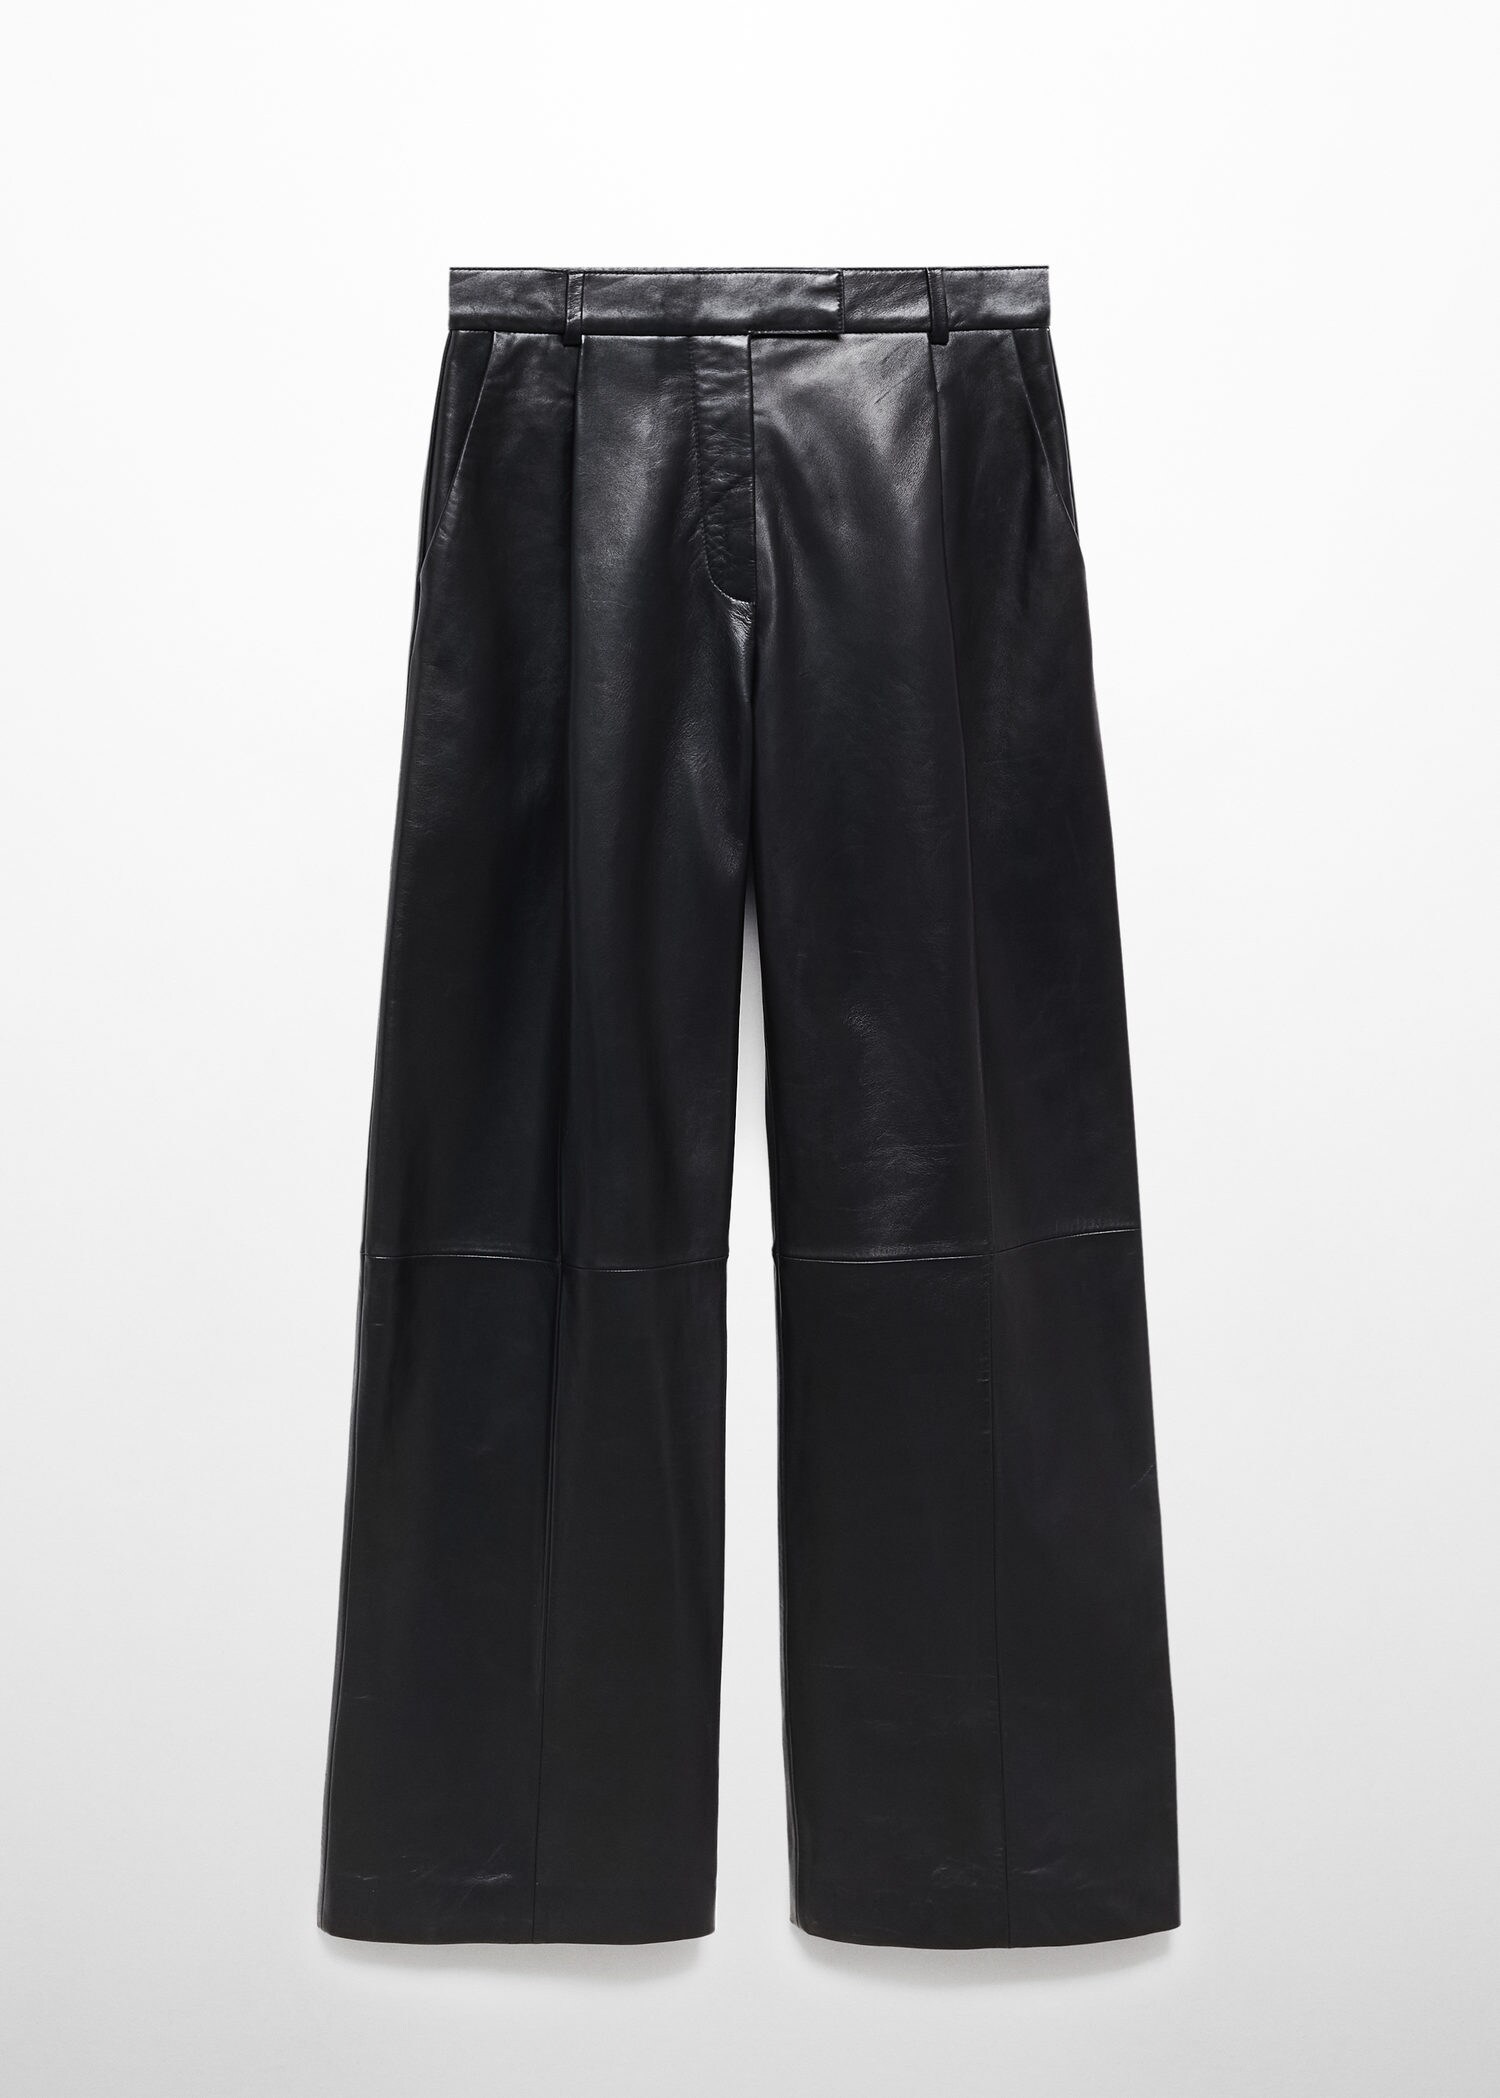 MANGO Straight Leather Pants for Women | Mercari